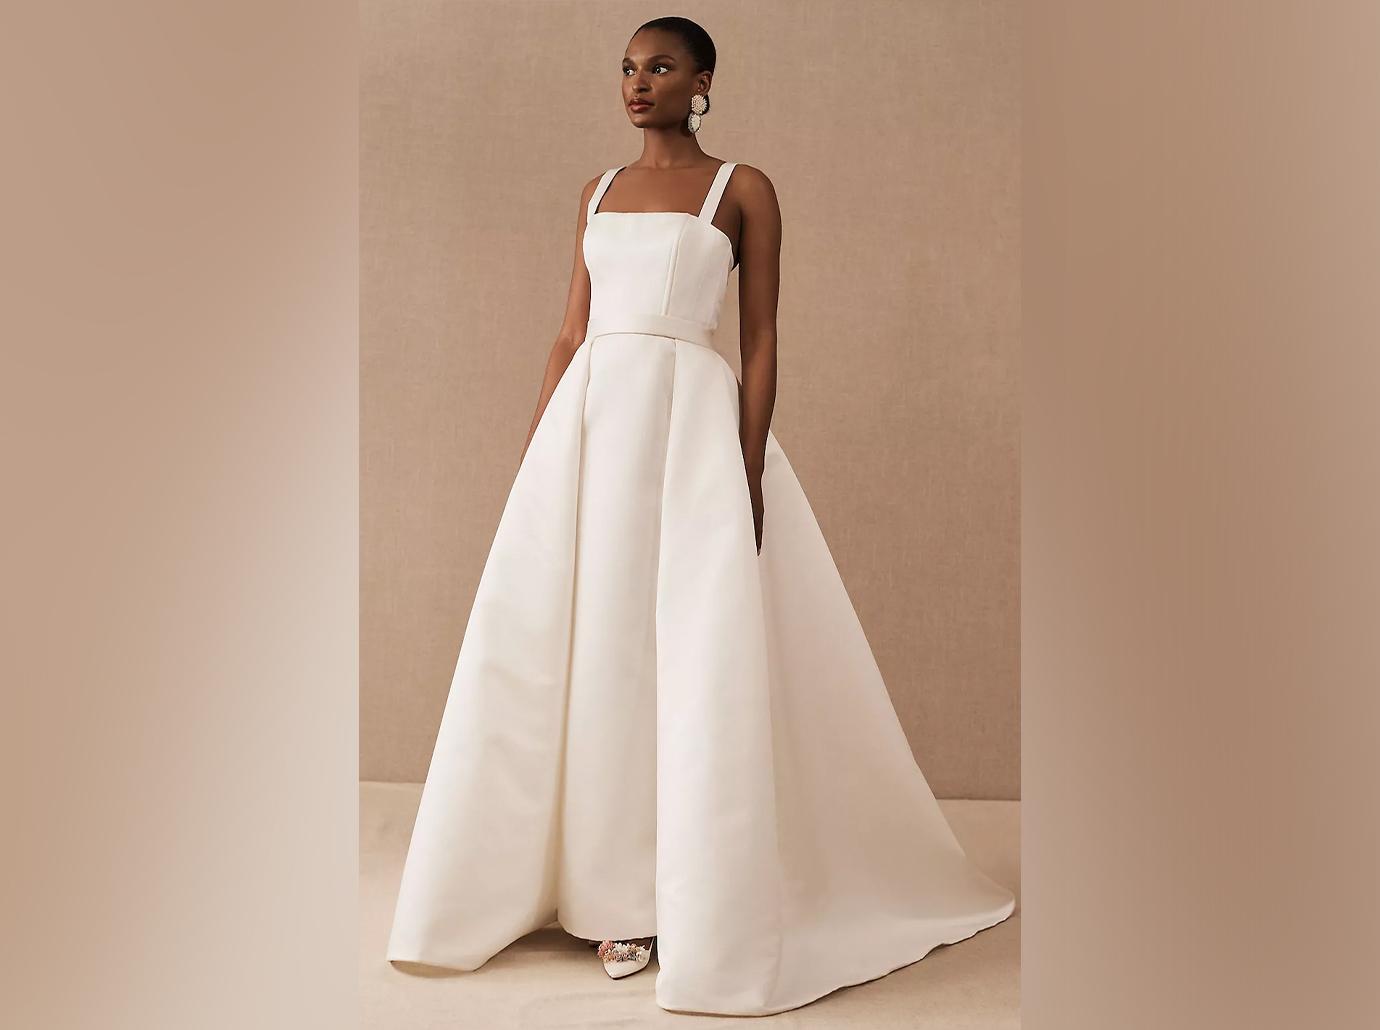 Nicola Peltz's Custom Valentino Couture Wedding Dress Was Like “A